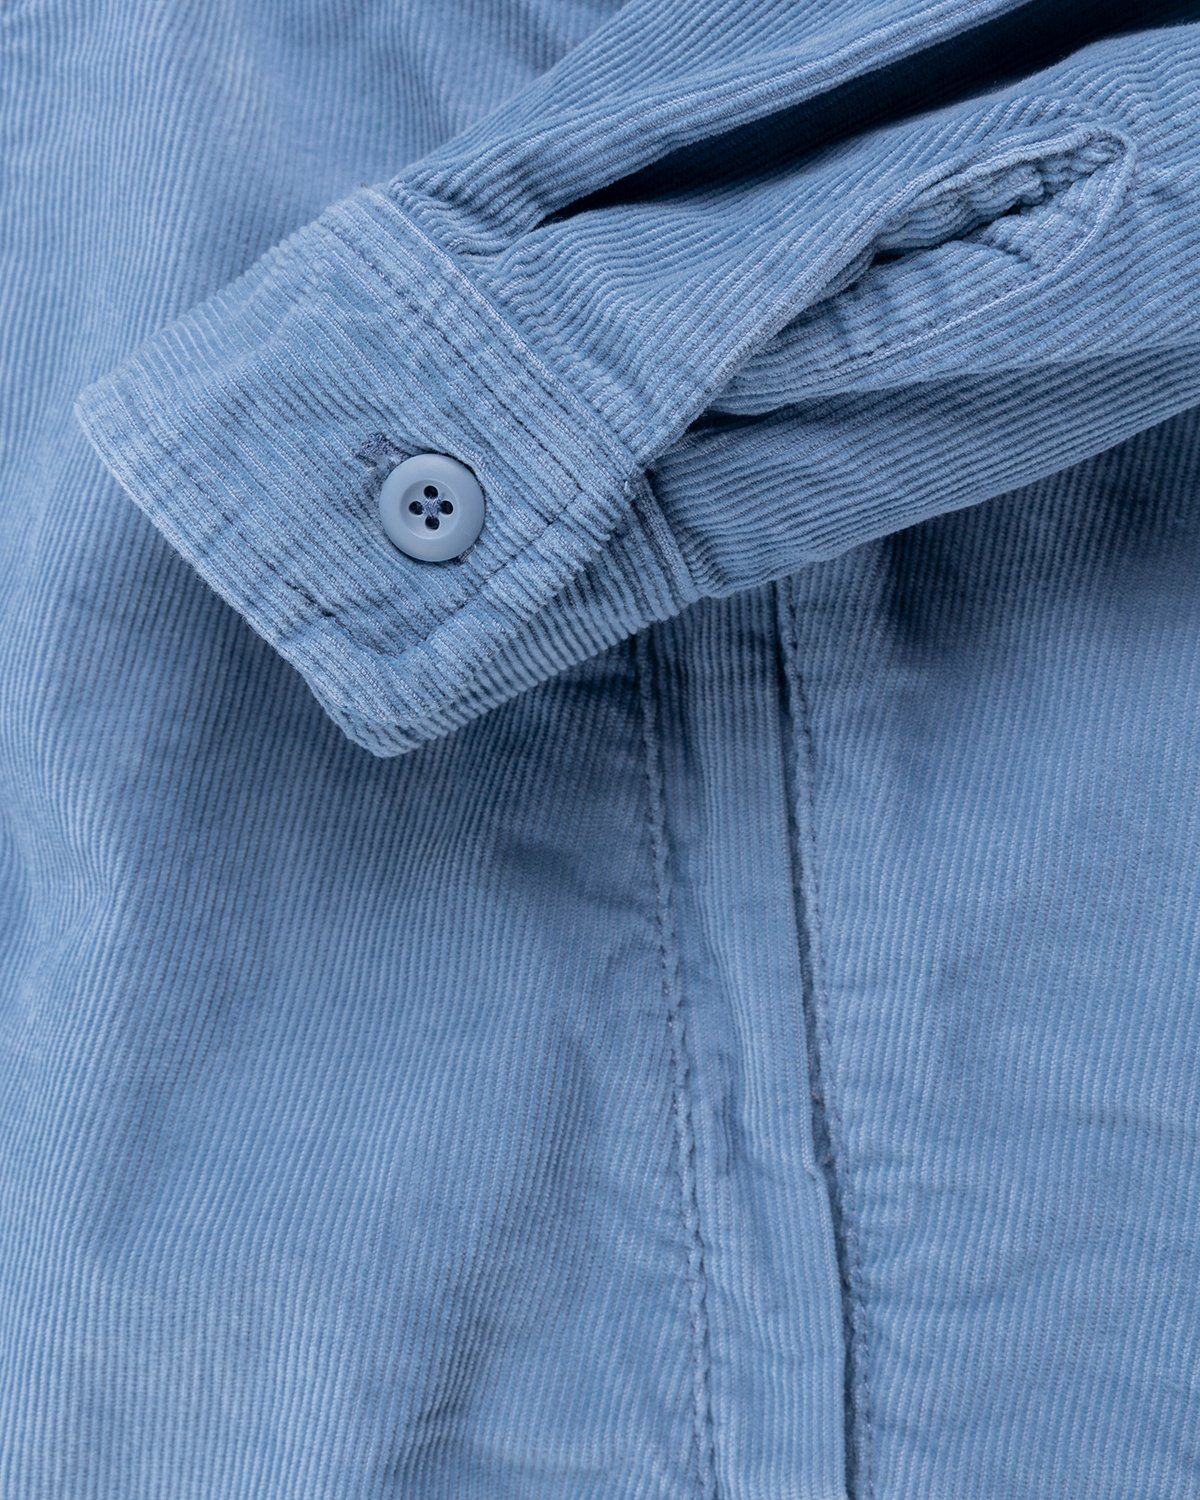 Carhartt WIP – Dixon Shirt Jacket Icy Water Rinsed - Overshirt - Blue - Image 4